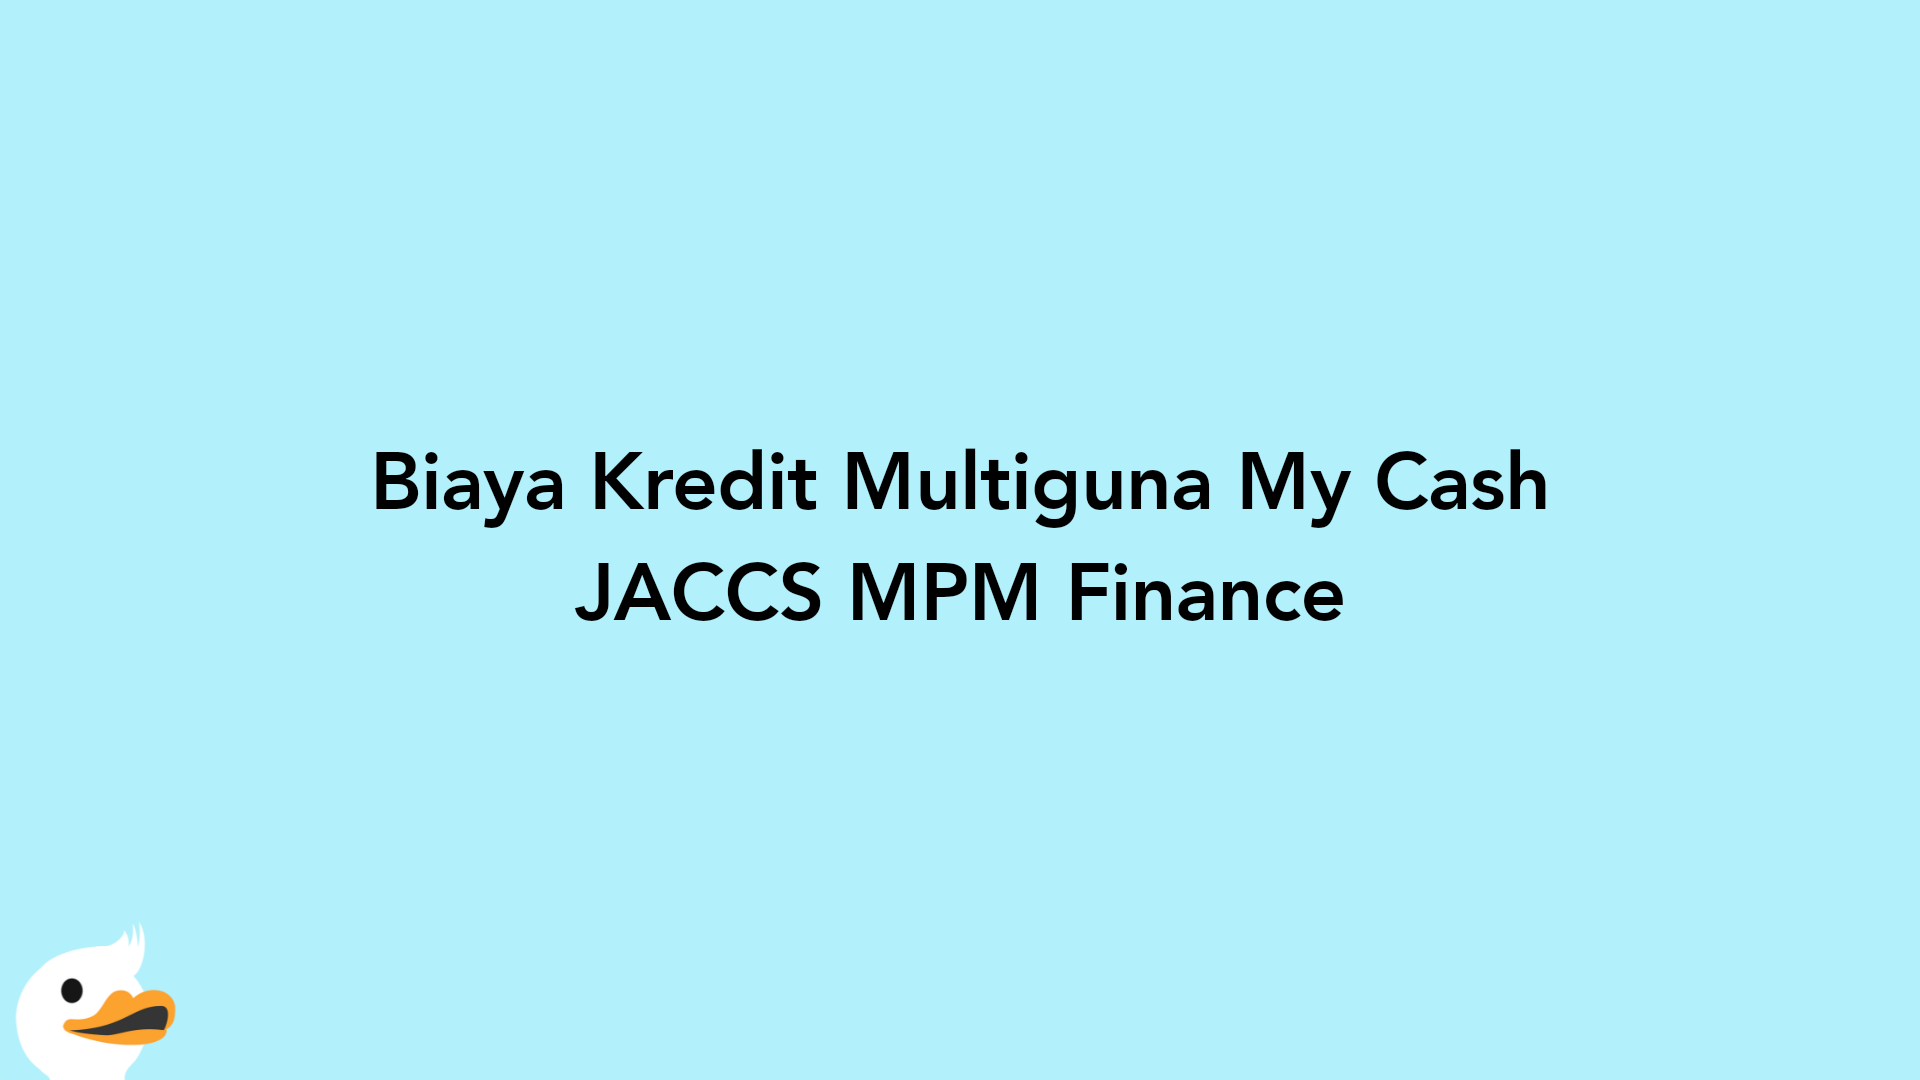 Biaya Kredit Multiguna My Cash JACCS MPM Finance